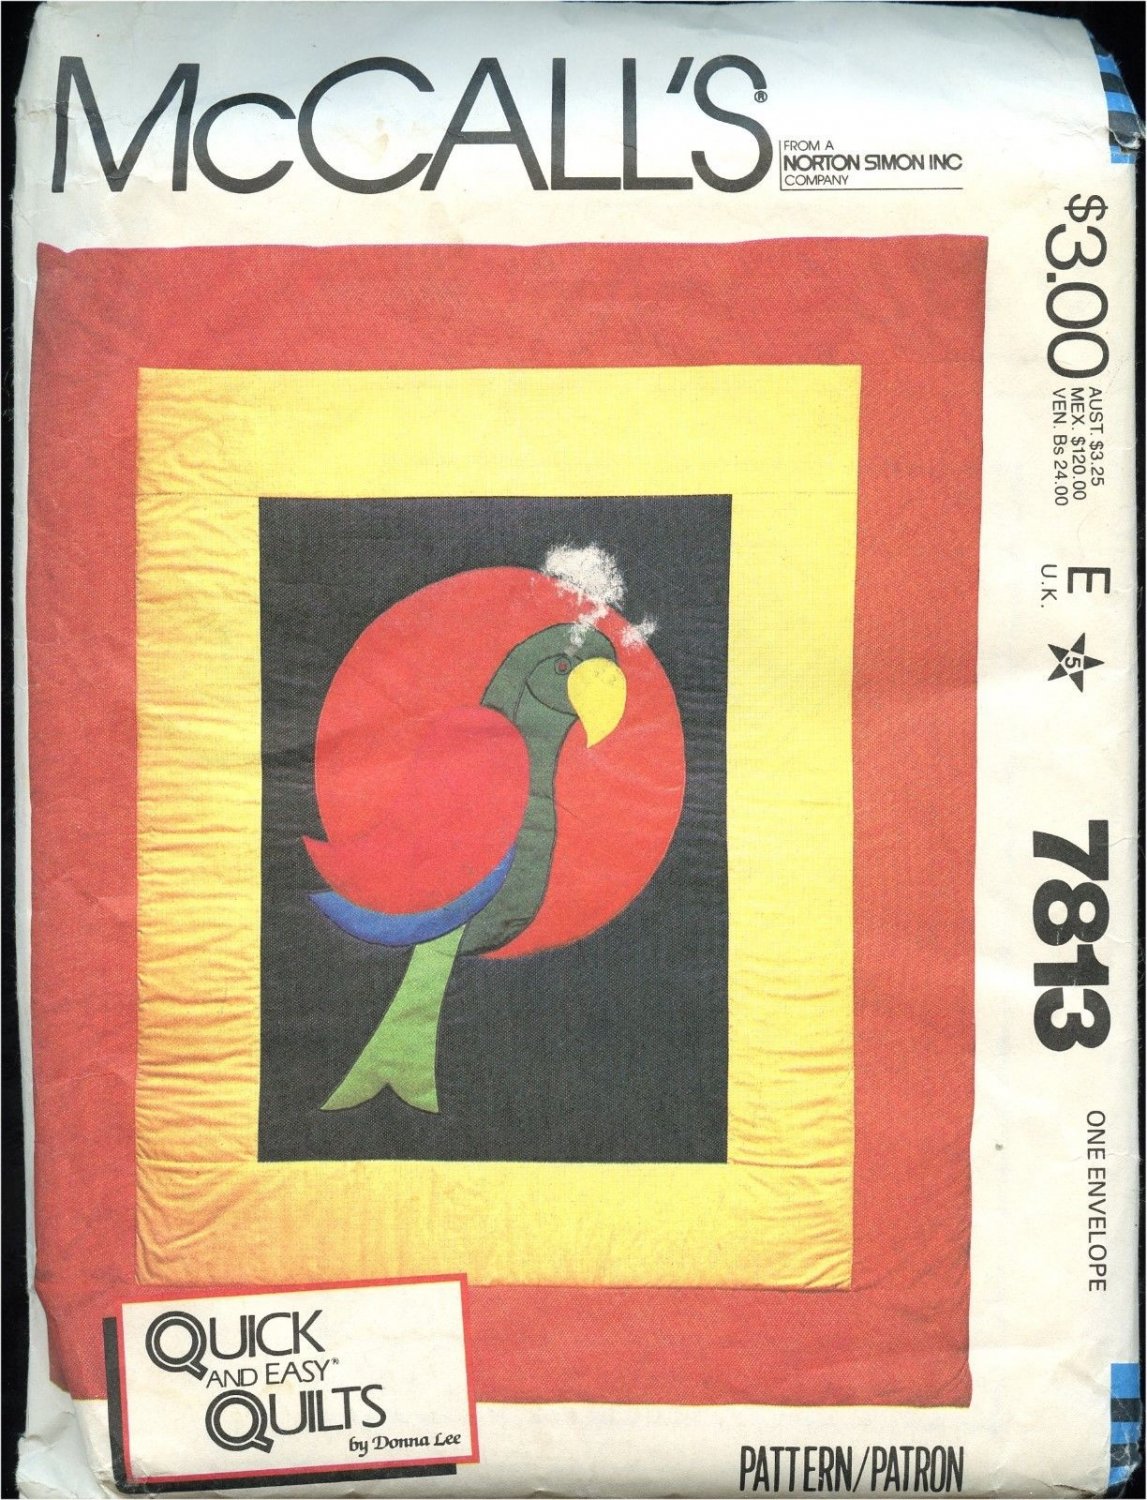 McCalls 7813 Parrot quilt 72x85 Quilting